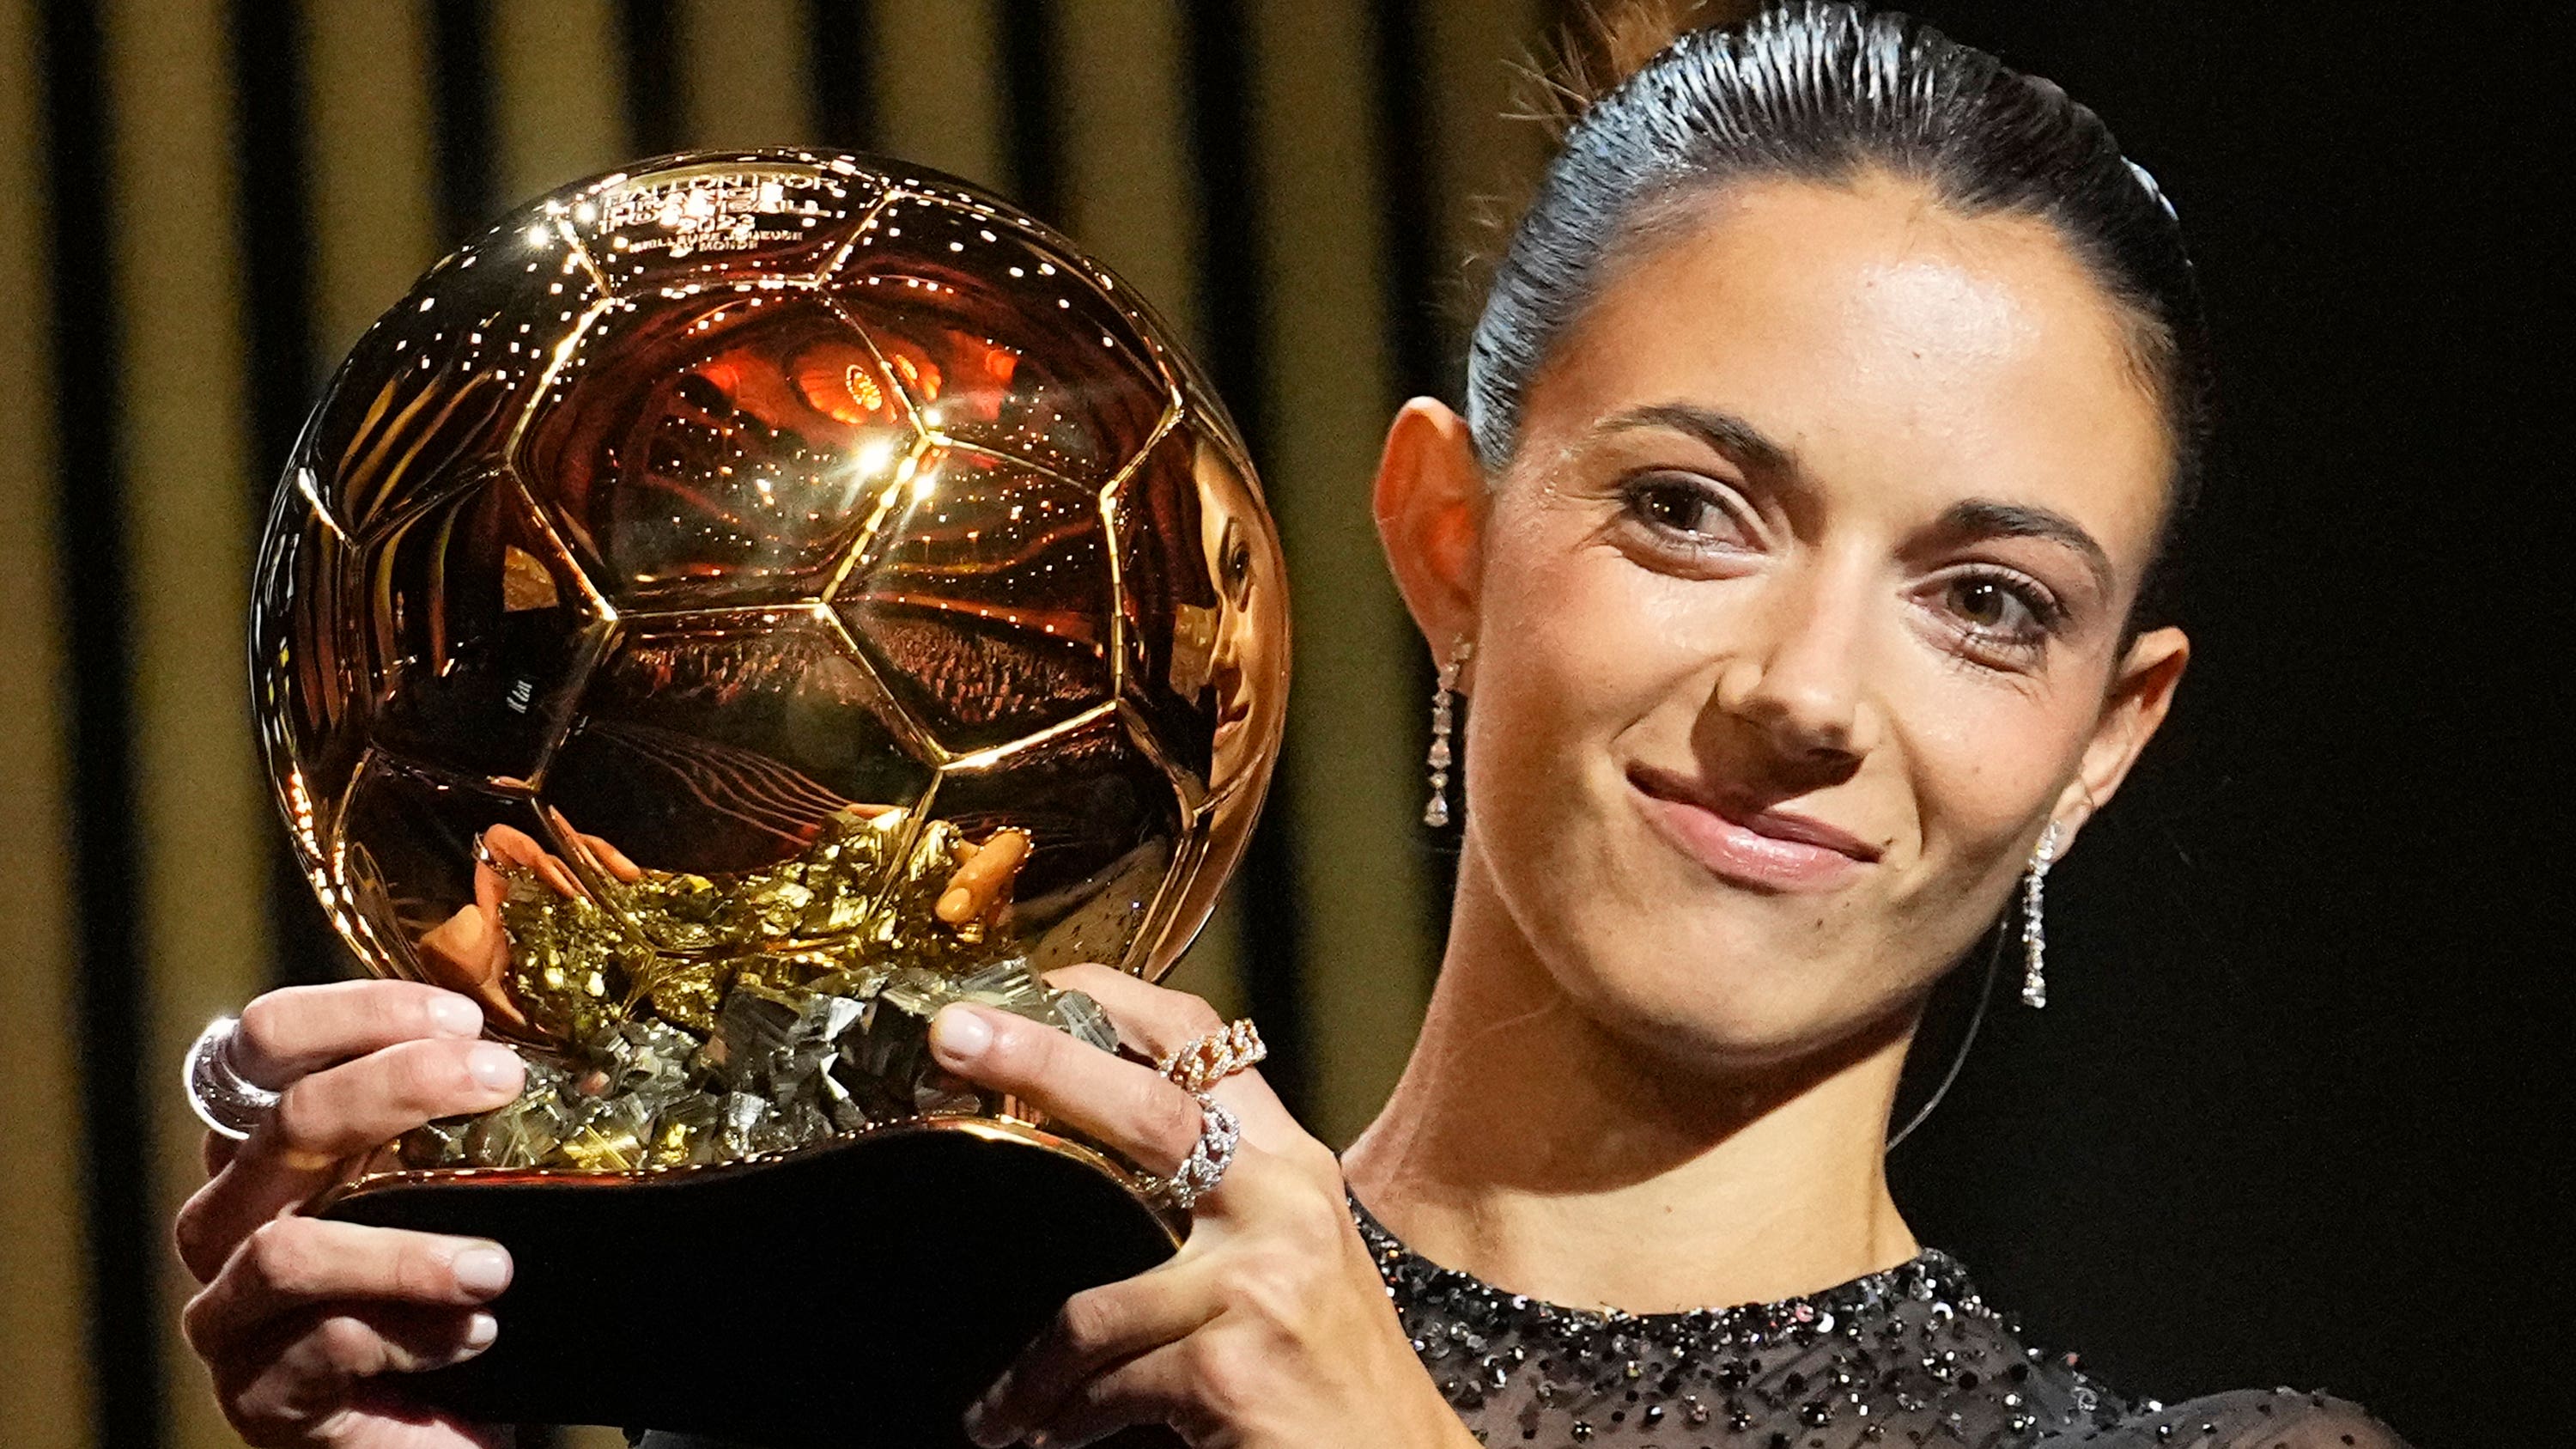 Barcelona and Spain midfielder Aitana Bonmati wins women’s Ballon d’Or